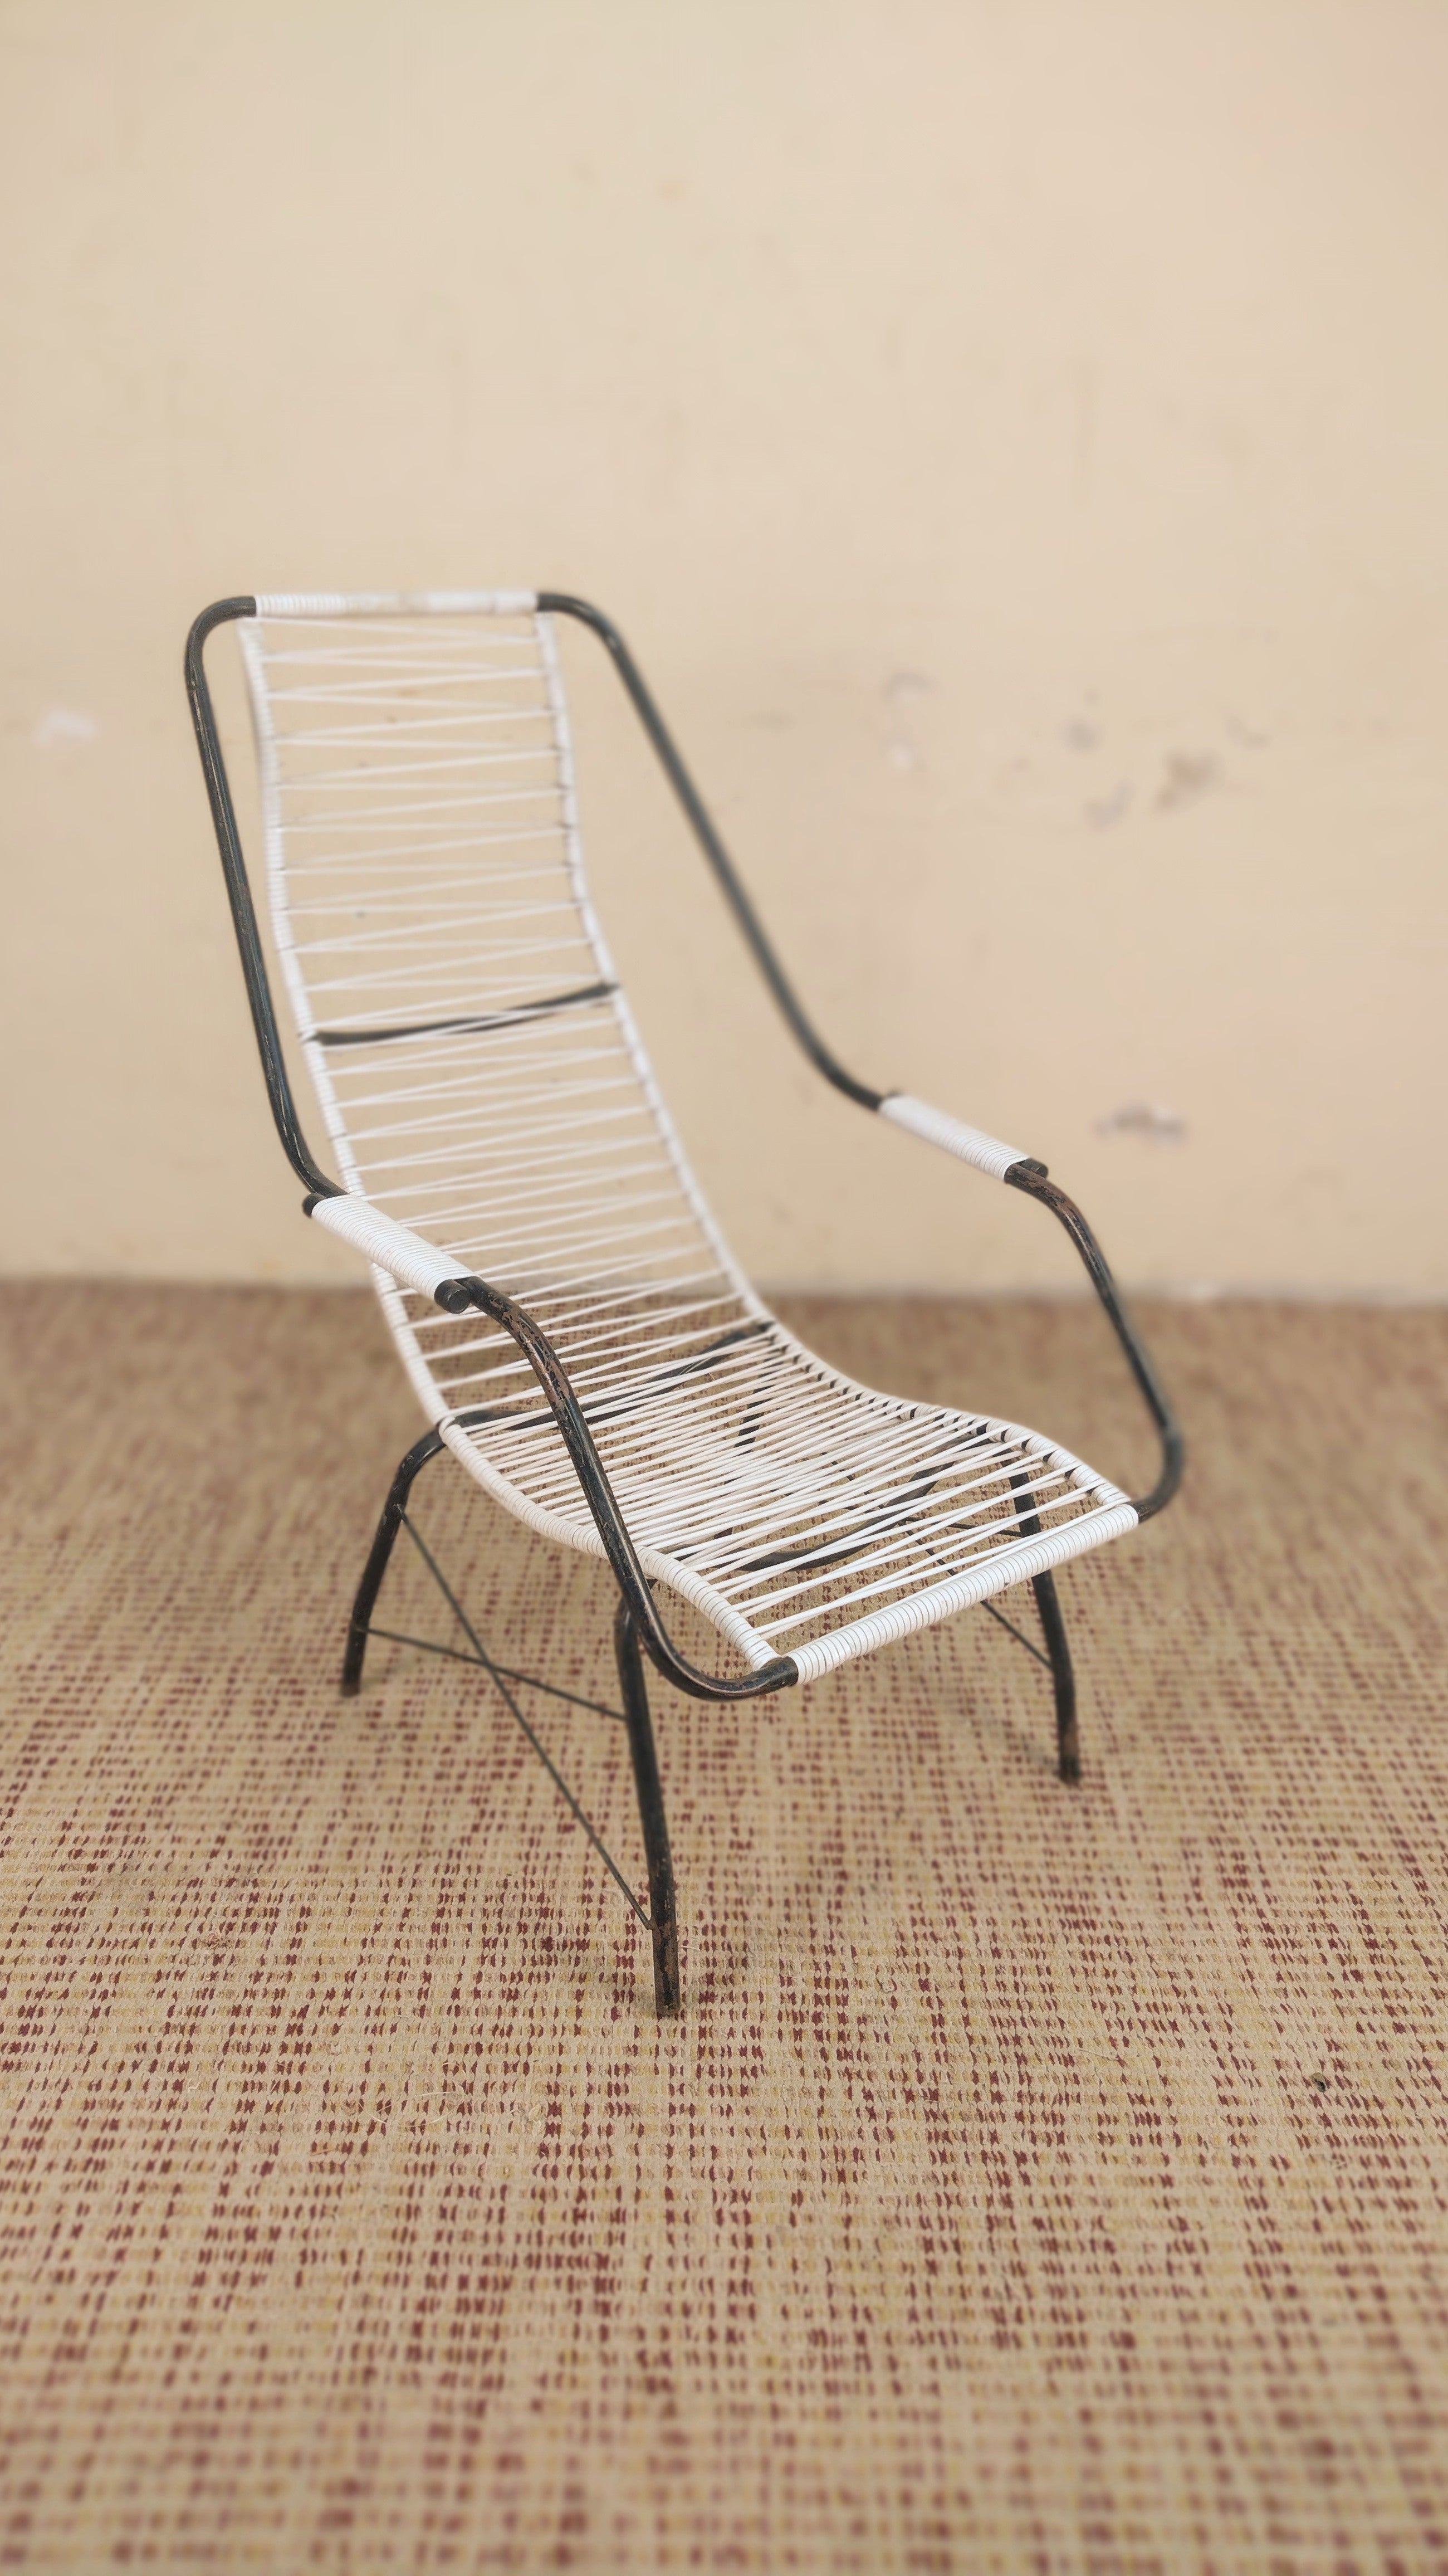 Antiga Cadeira em ferro e Spaguetti branco